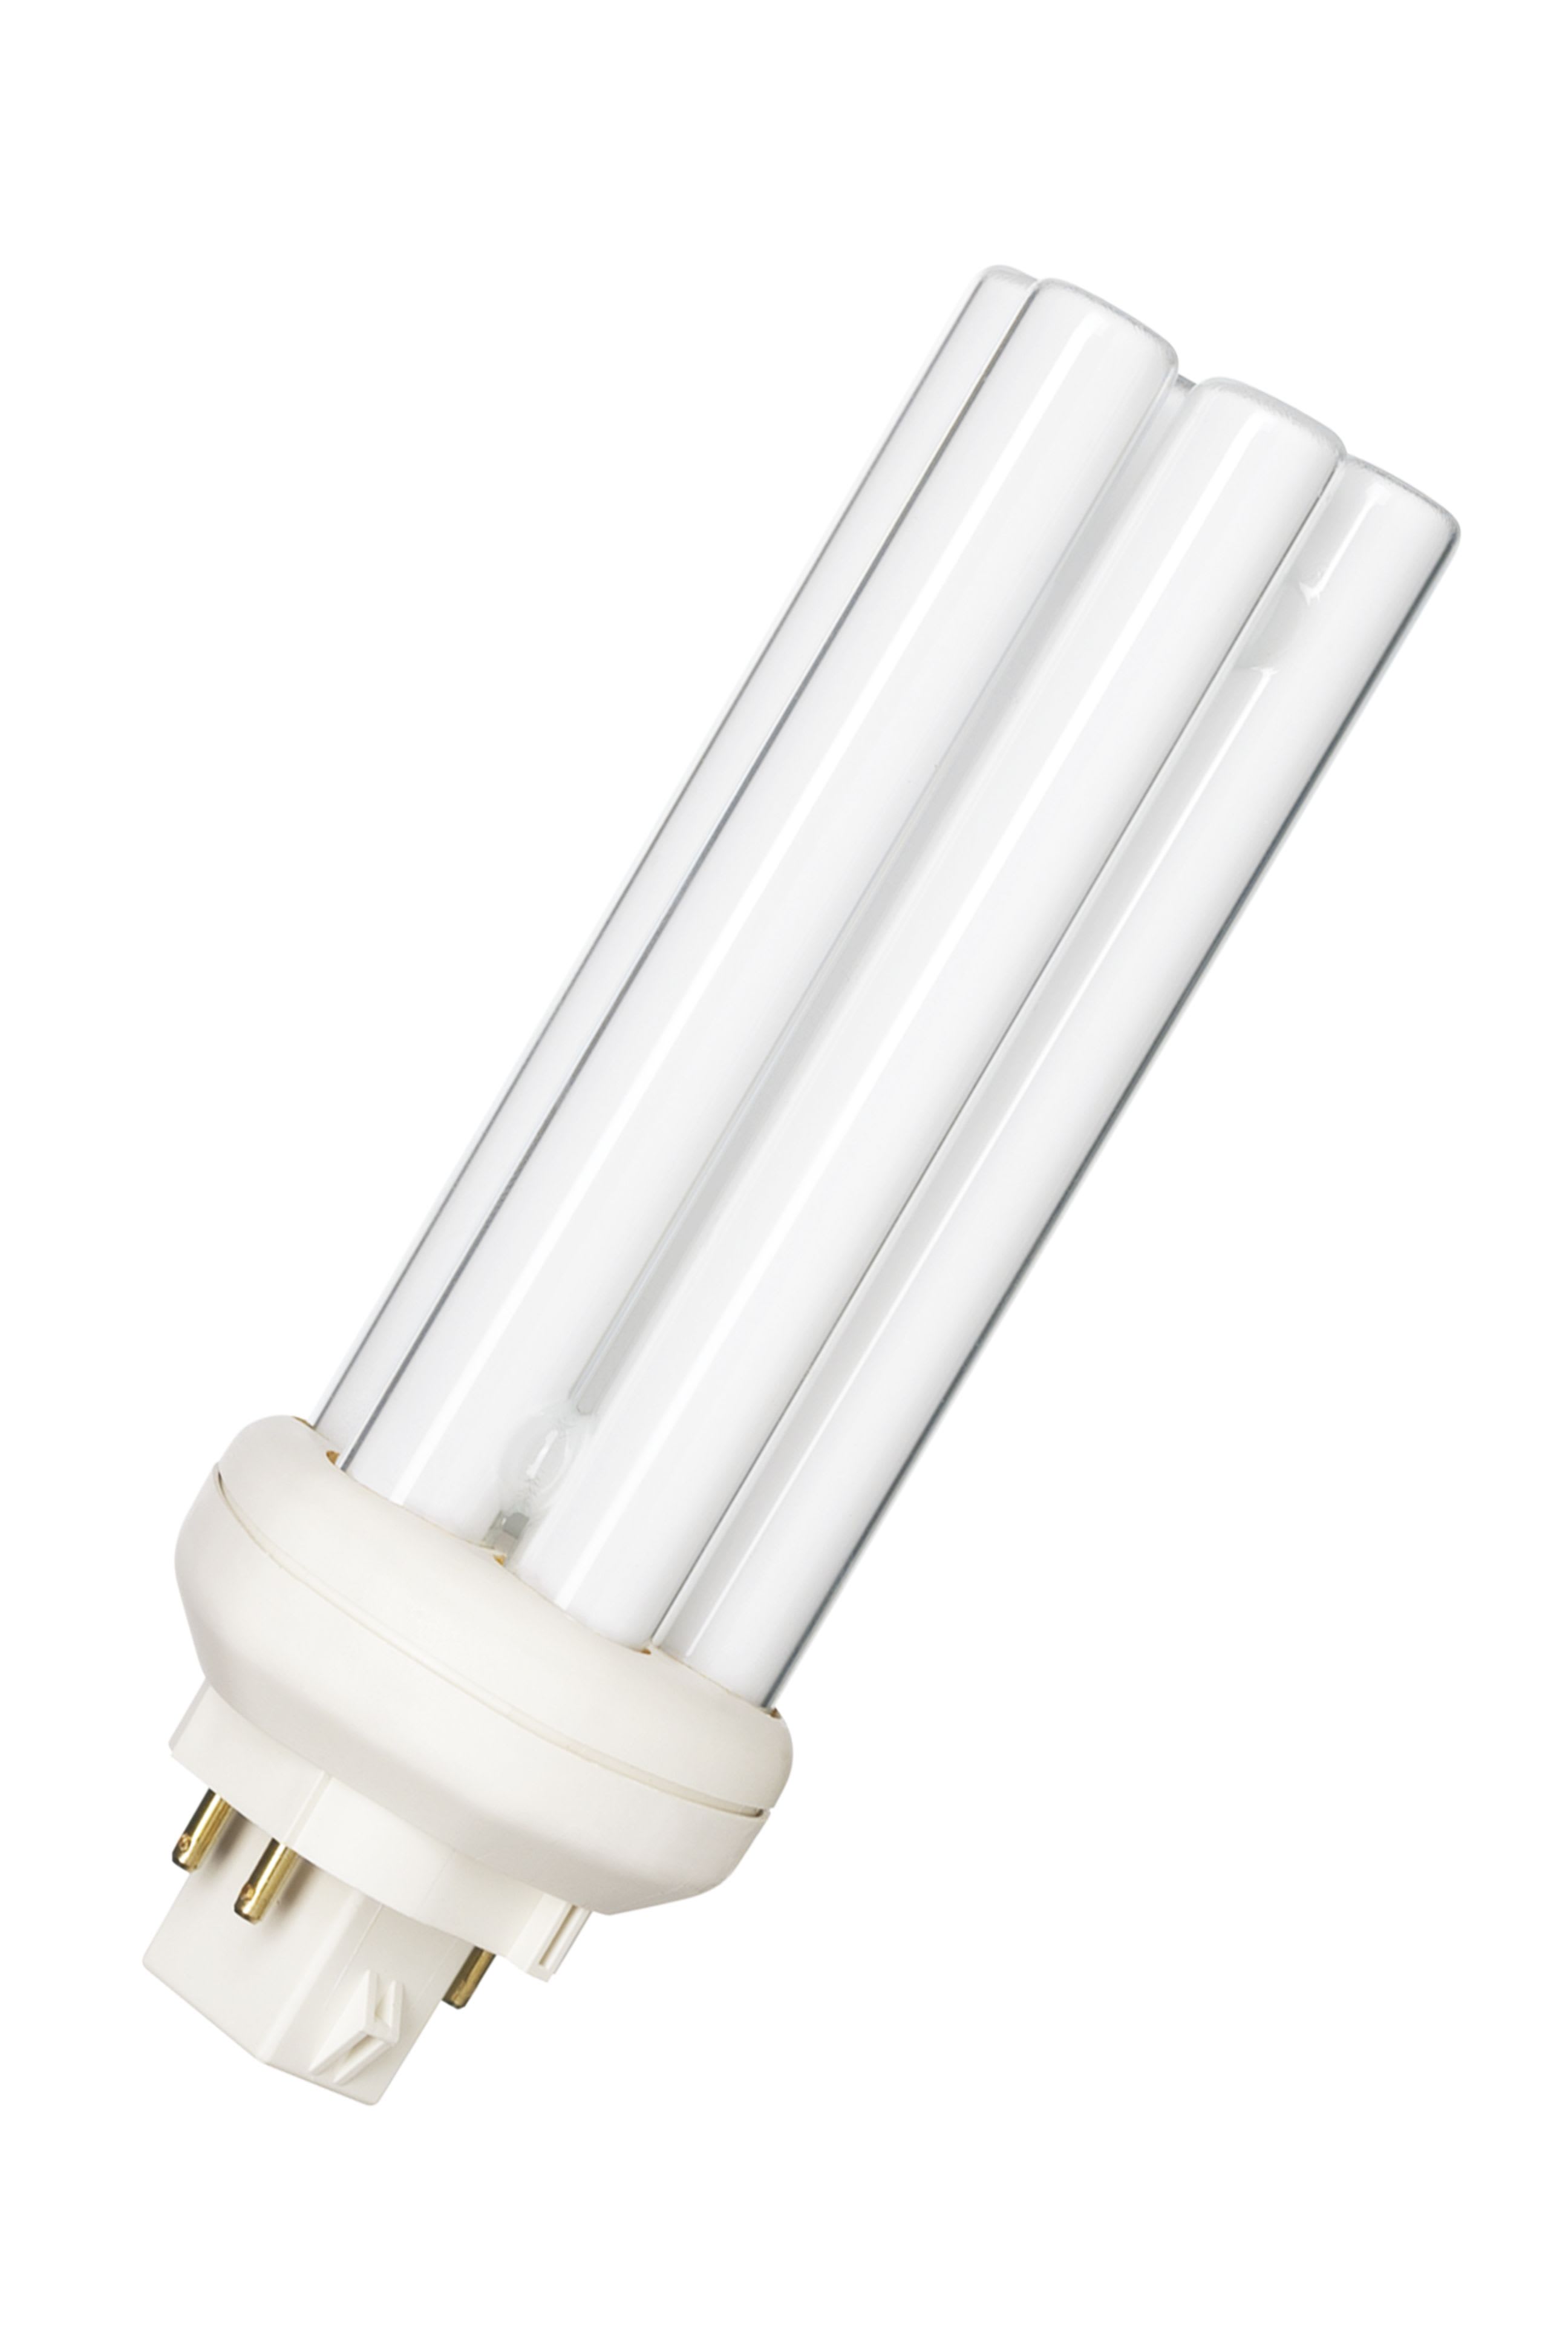 Bailey - PHI Lampe fluocompacte MASTER PL-T 26W/840/4P